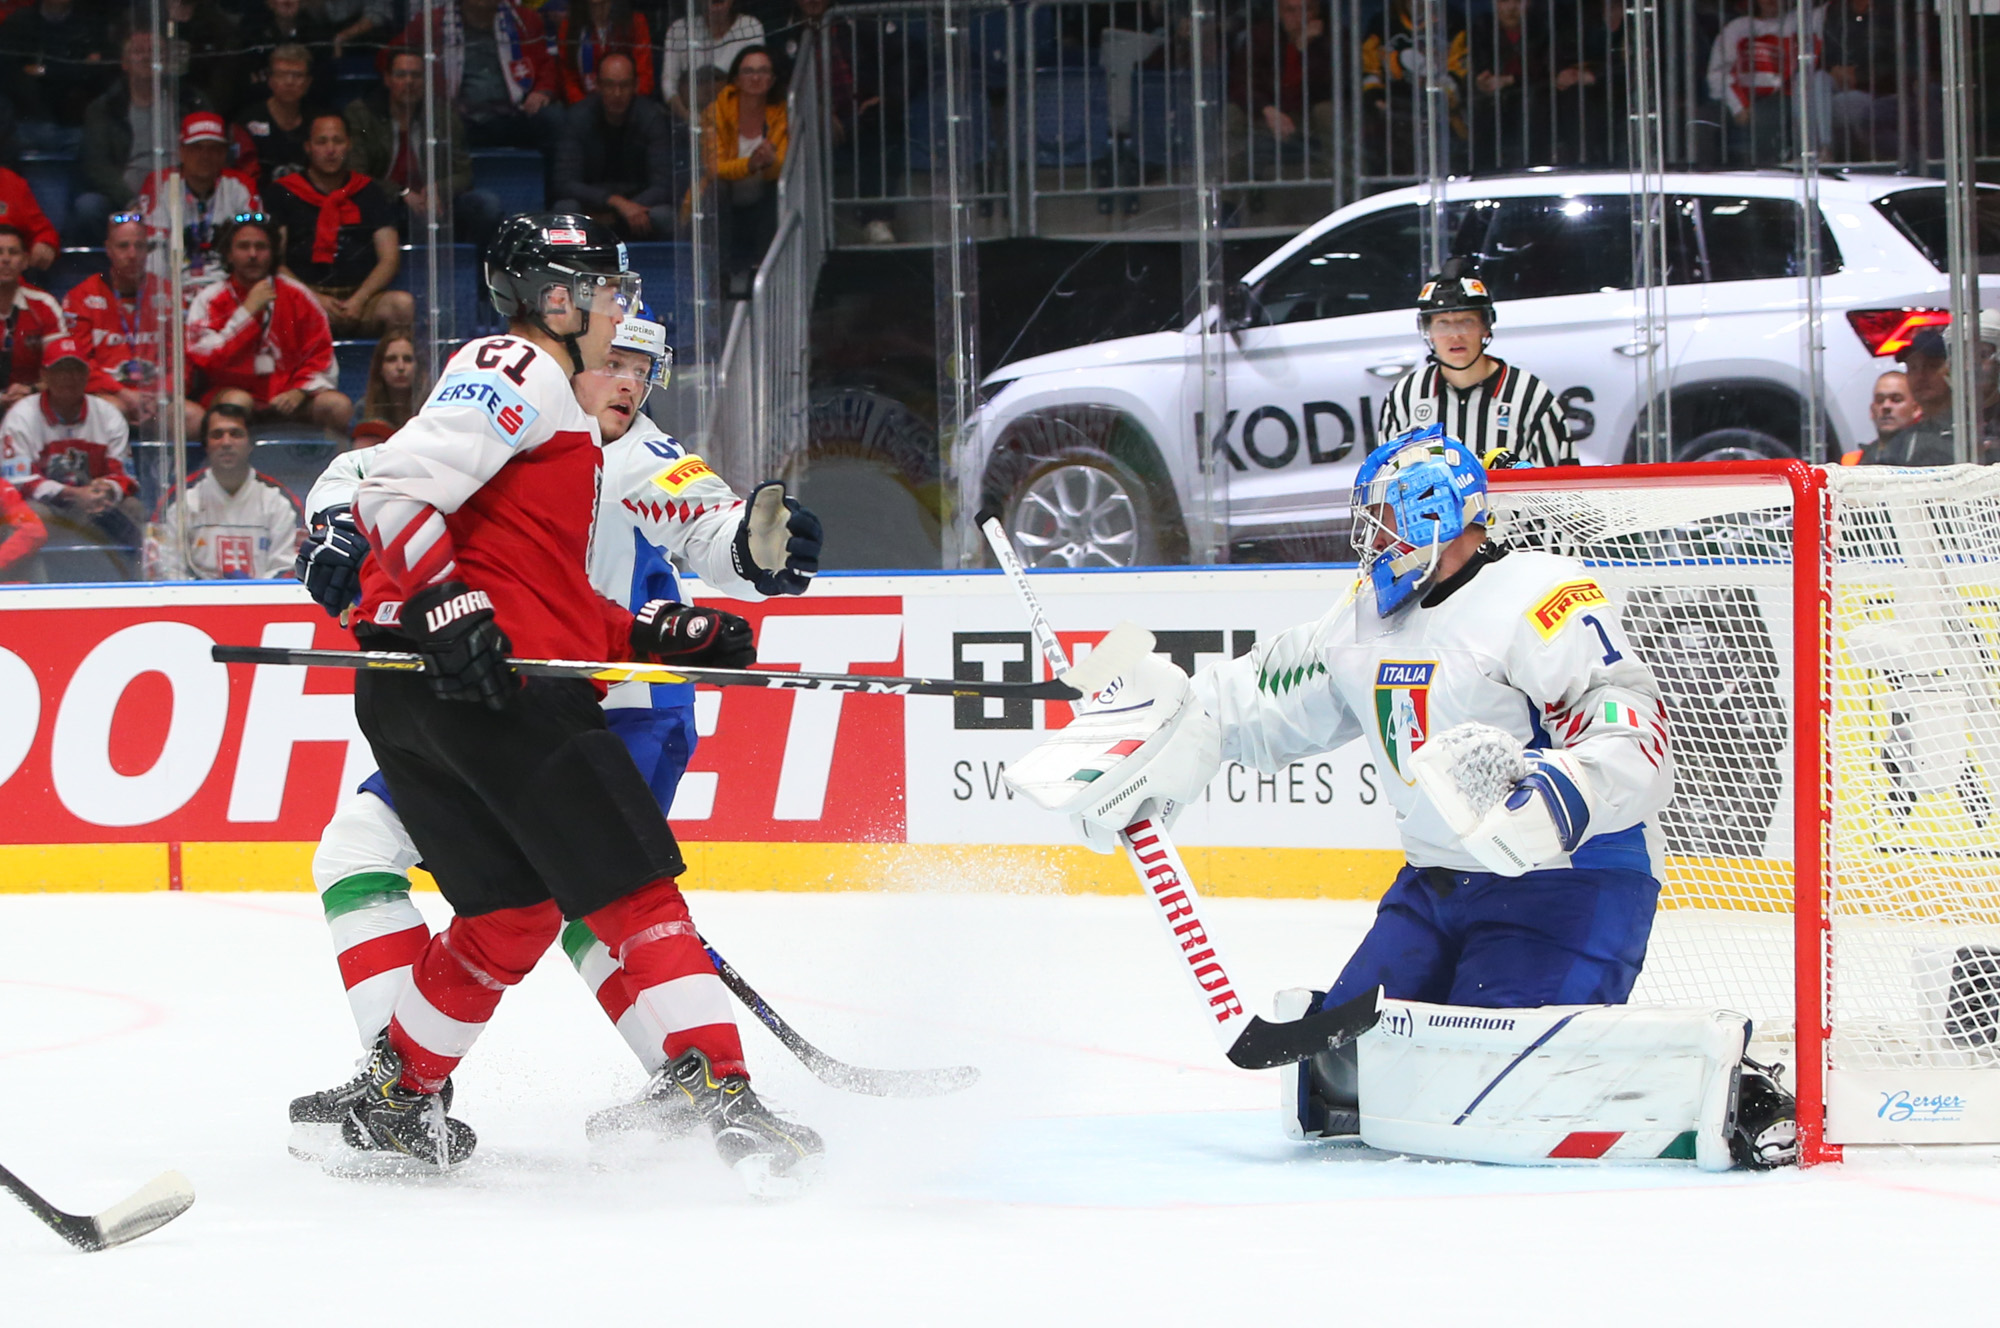 IIHF - Gallery: Austria vs. Italy - 2019 IIHF Ice Hockey World Championship